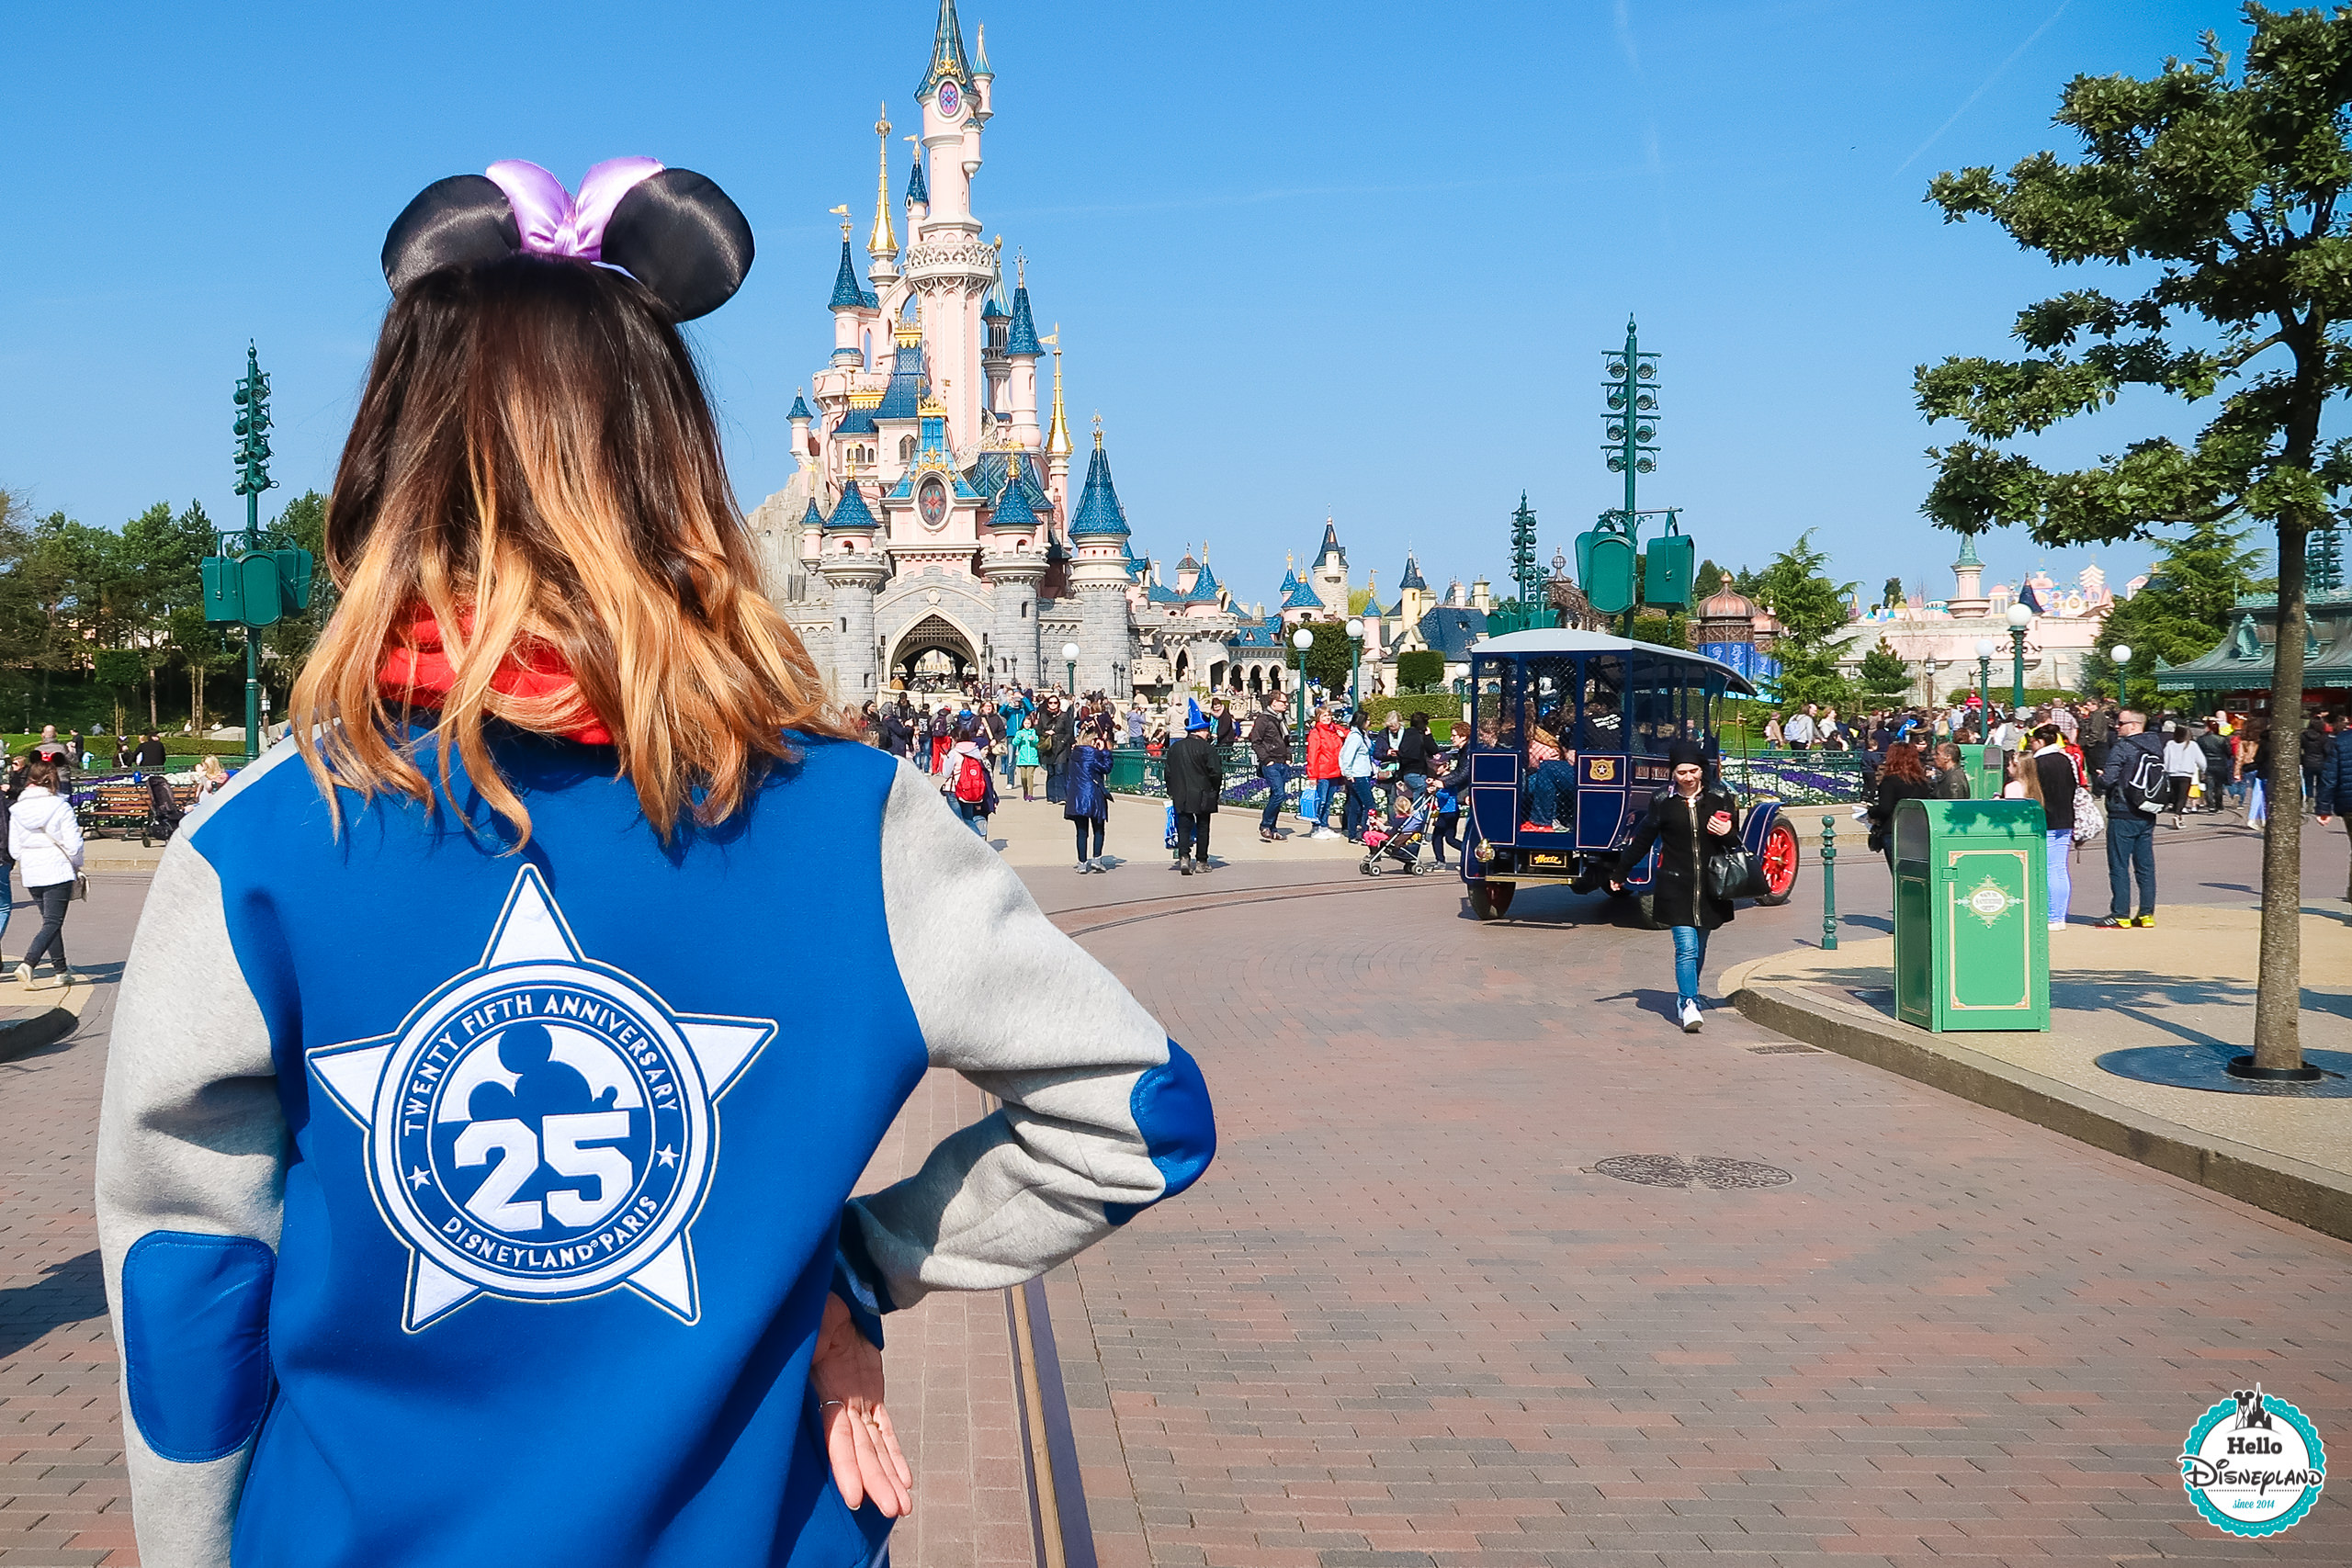 25 ans - Disneyland Paris / Disneyland Paris 25th